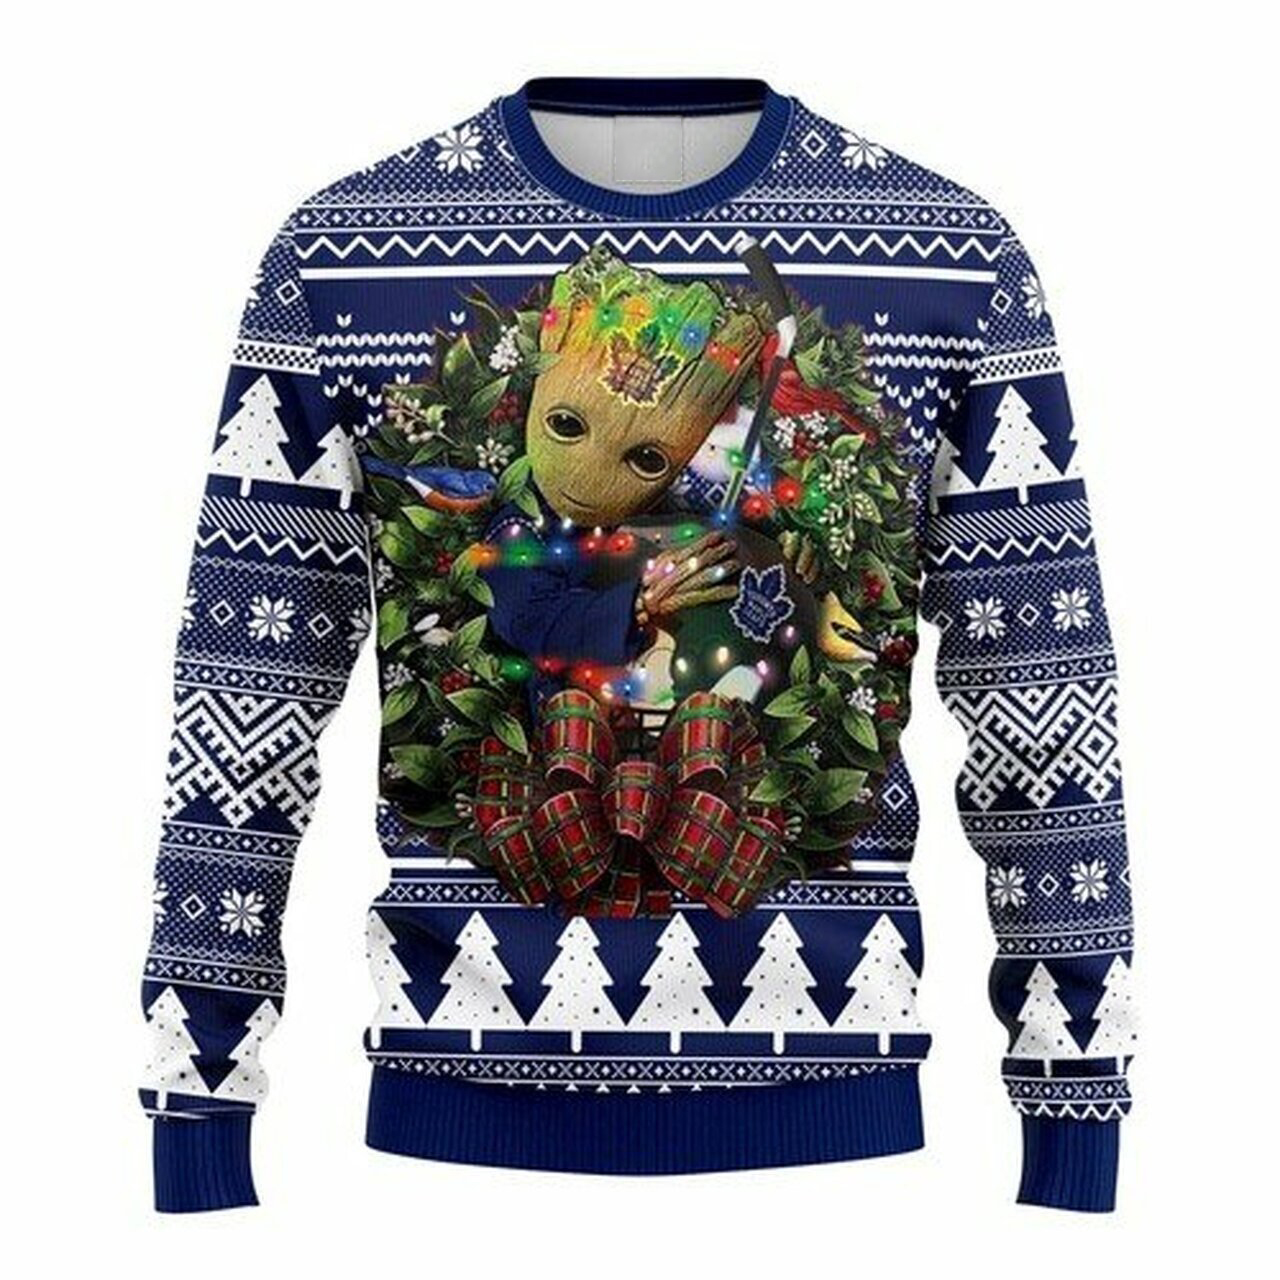 NHL Toronto Maple Leafs Groot hug ugly christmas sweater